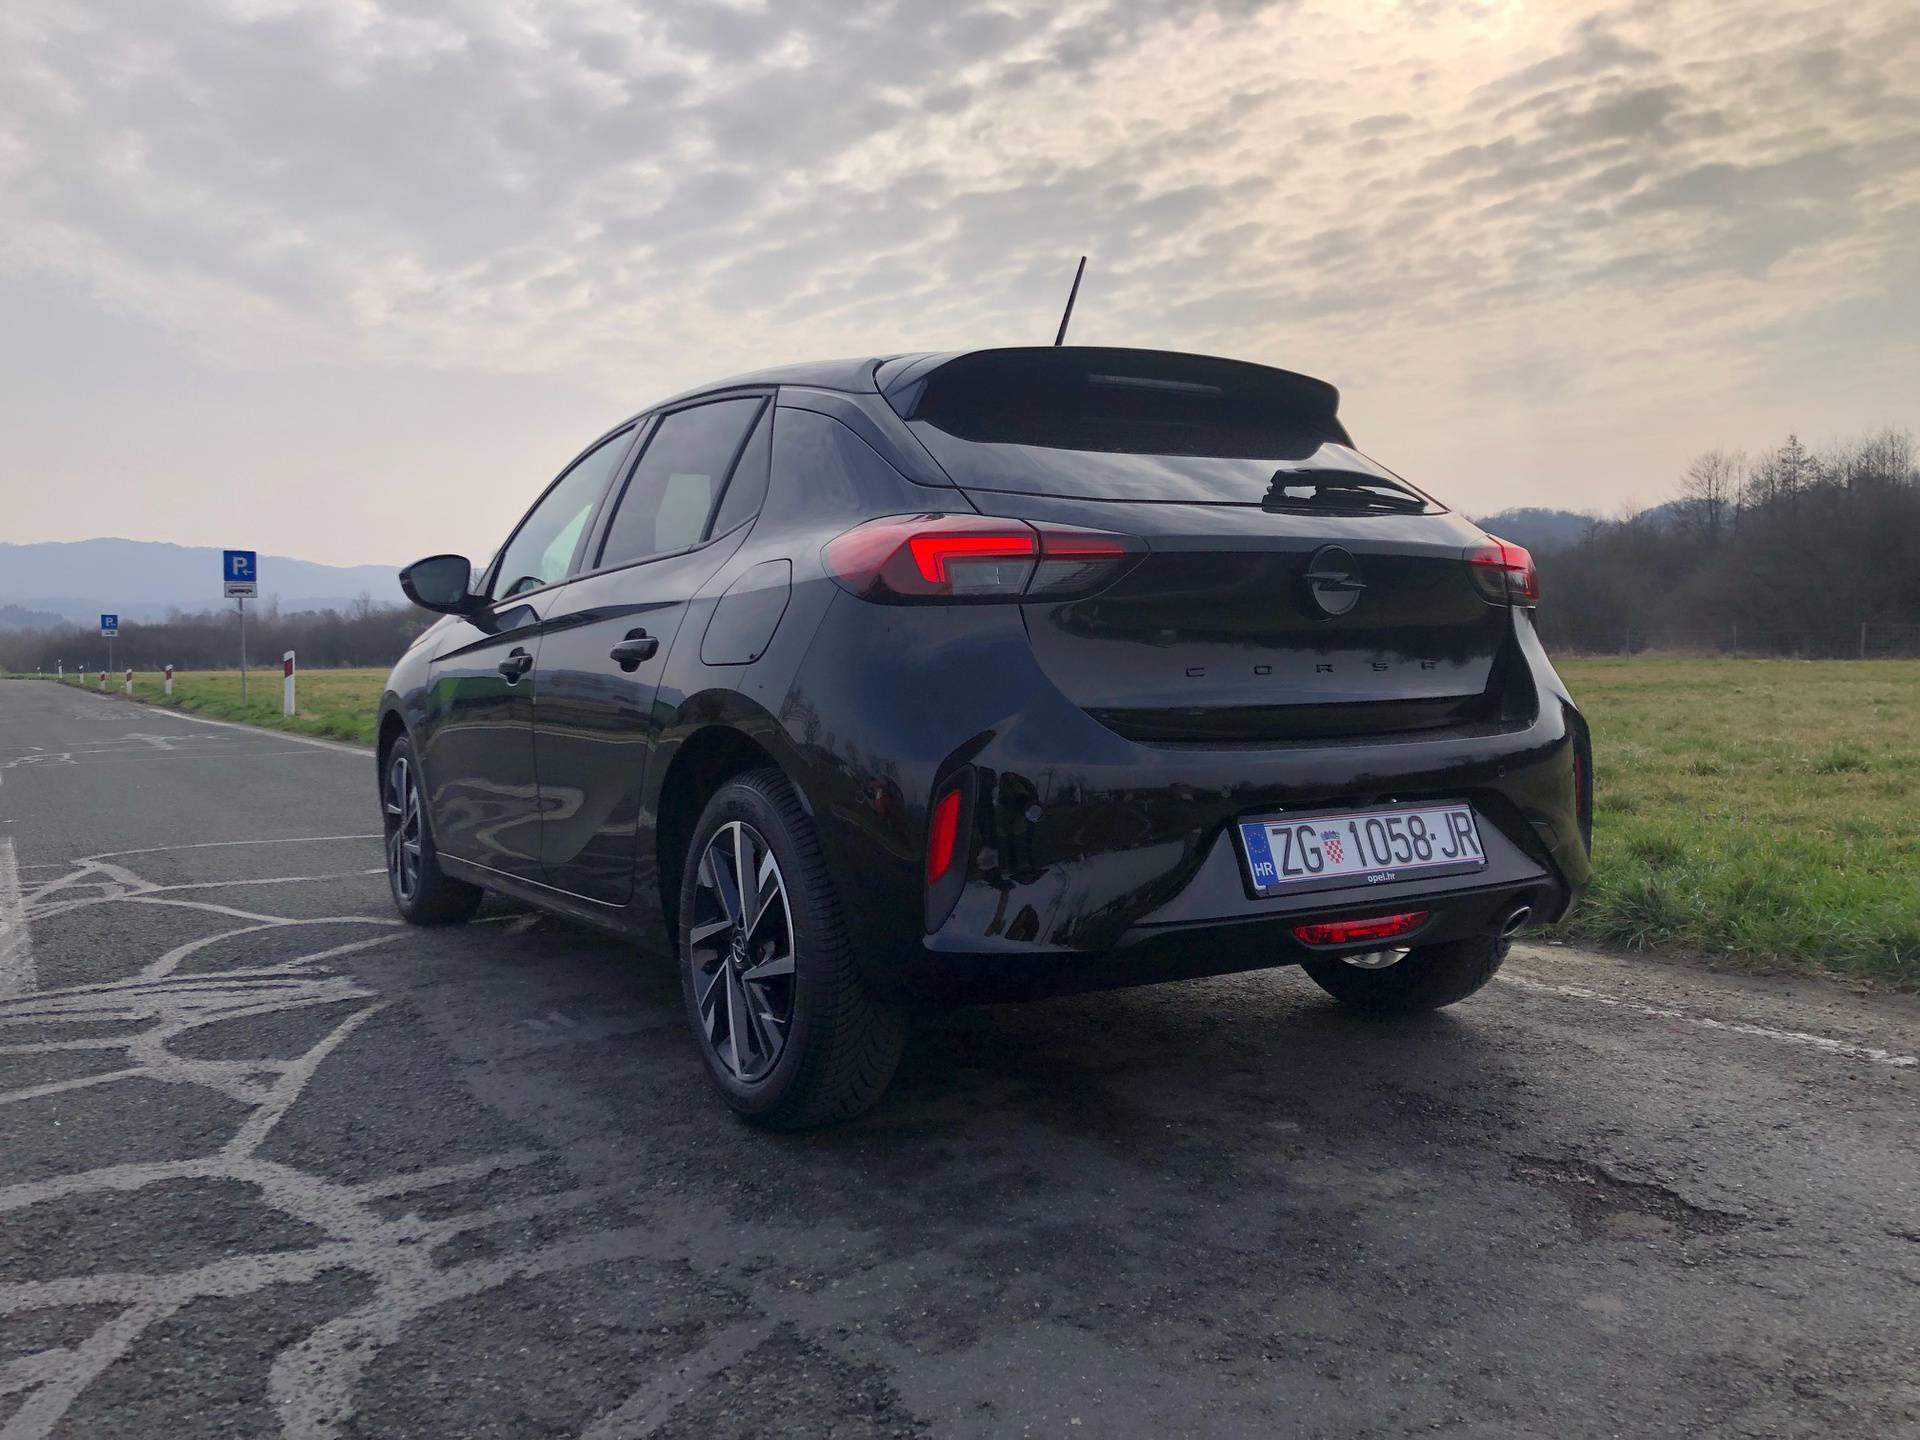 U Hrvatsku stigli obnovljeni Opel Corsa i Astra karavan